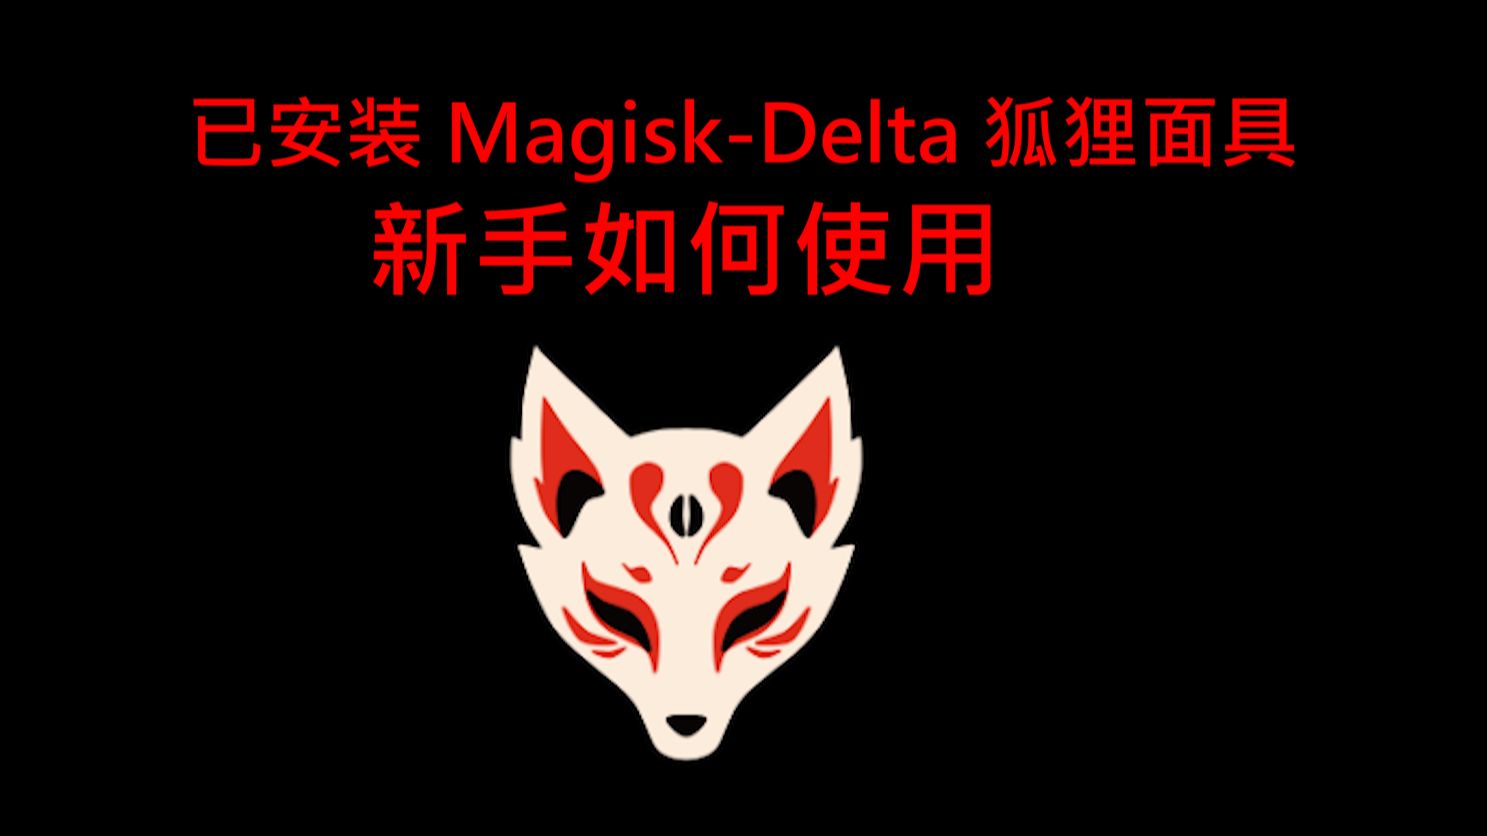 当你安装Magisk-Kitsune-(Delta狐狸面具)之后如何使用它?